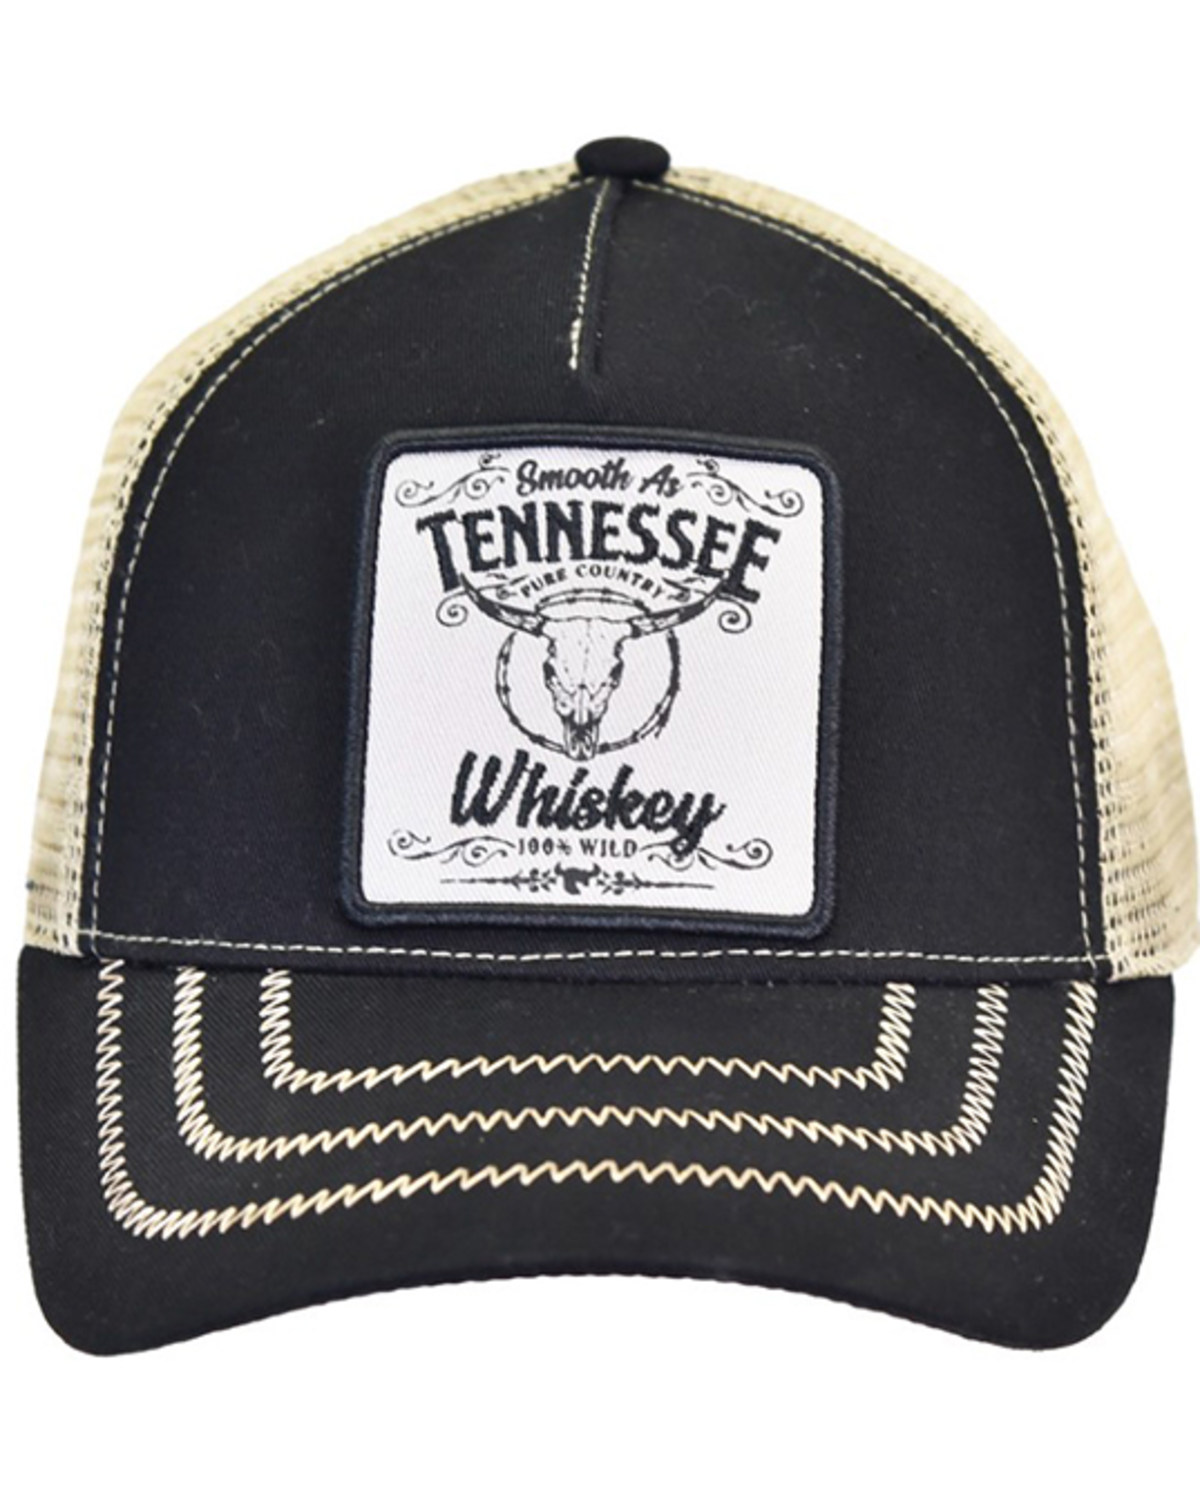 Cowboy Hardware Men's Tennessee Whiskey Baseball Cap